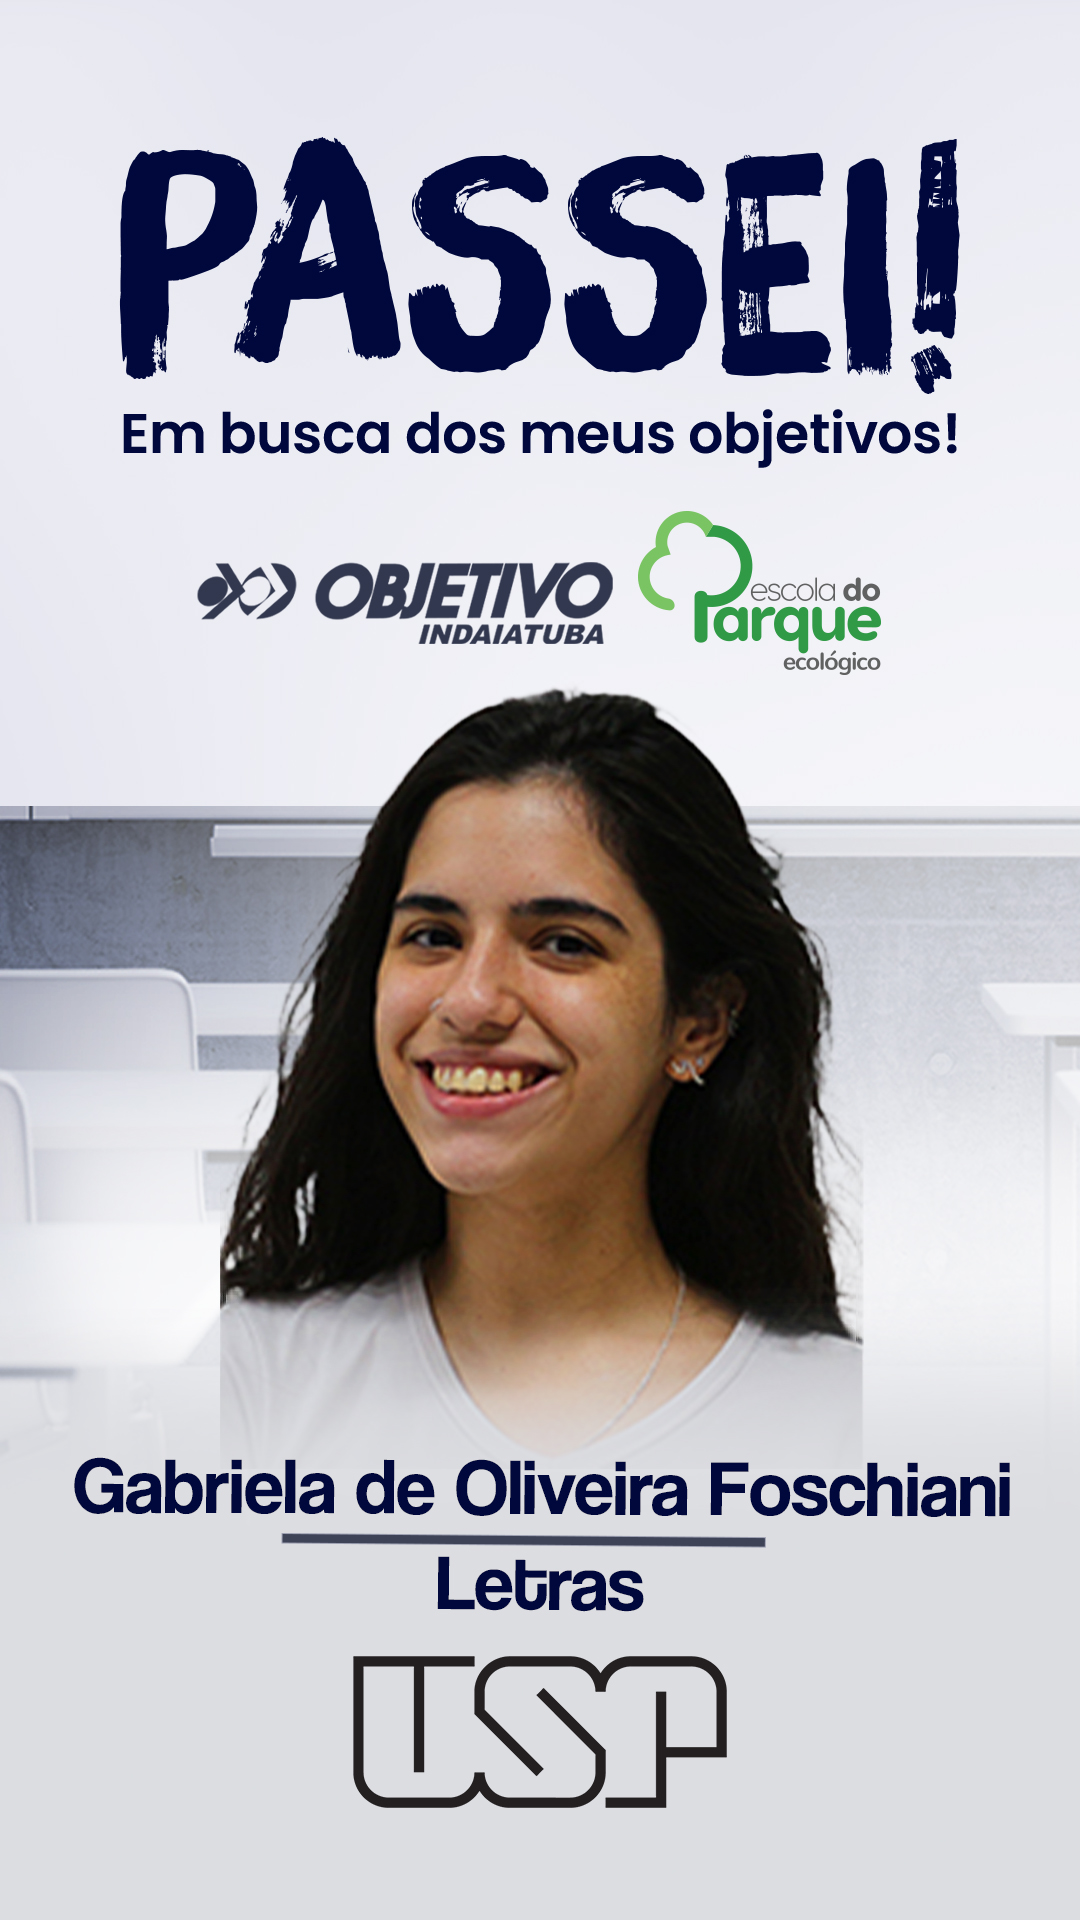 Gabriela de Oliveira Foschiani